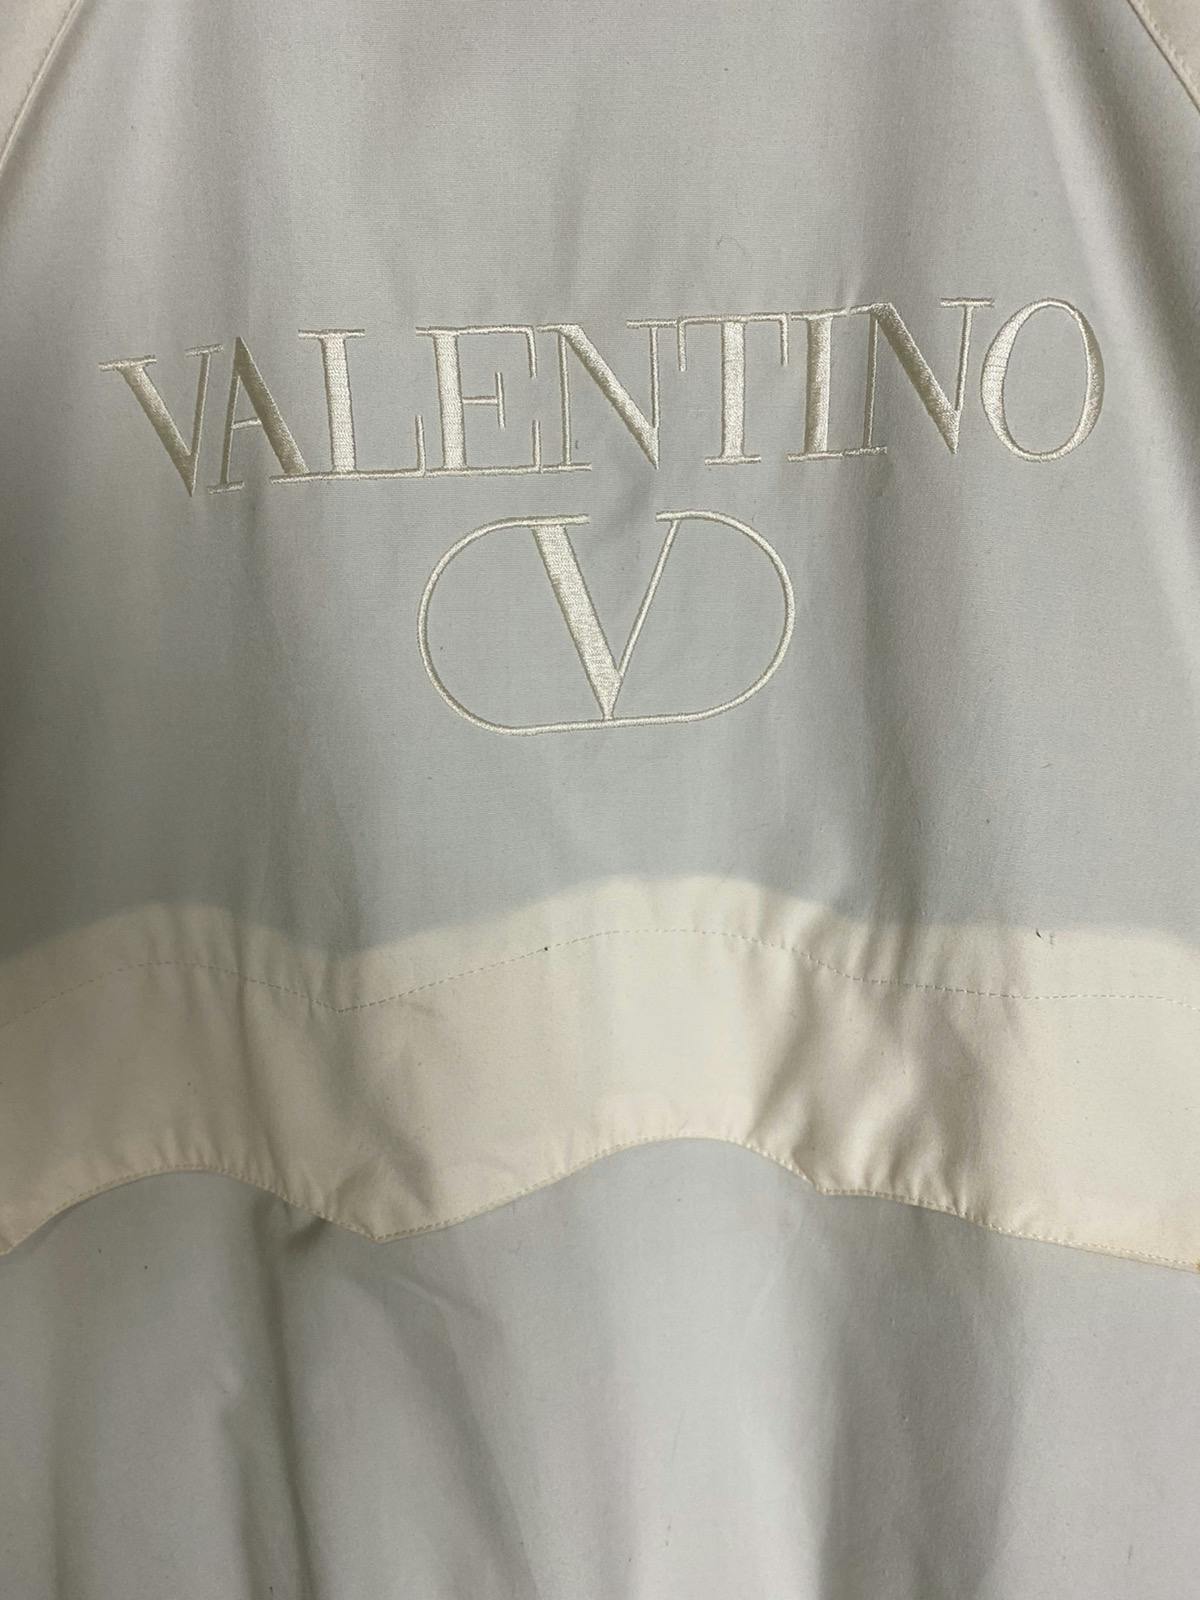 VALENTINO Jeans Spellout Harrington Jacket - 4